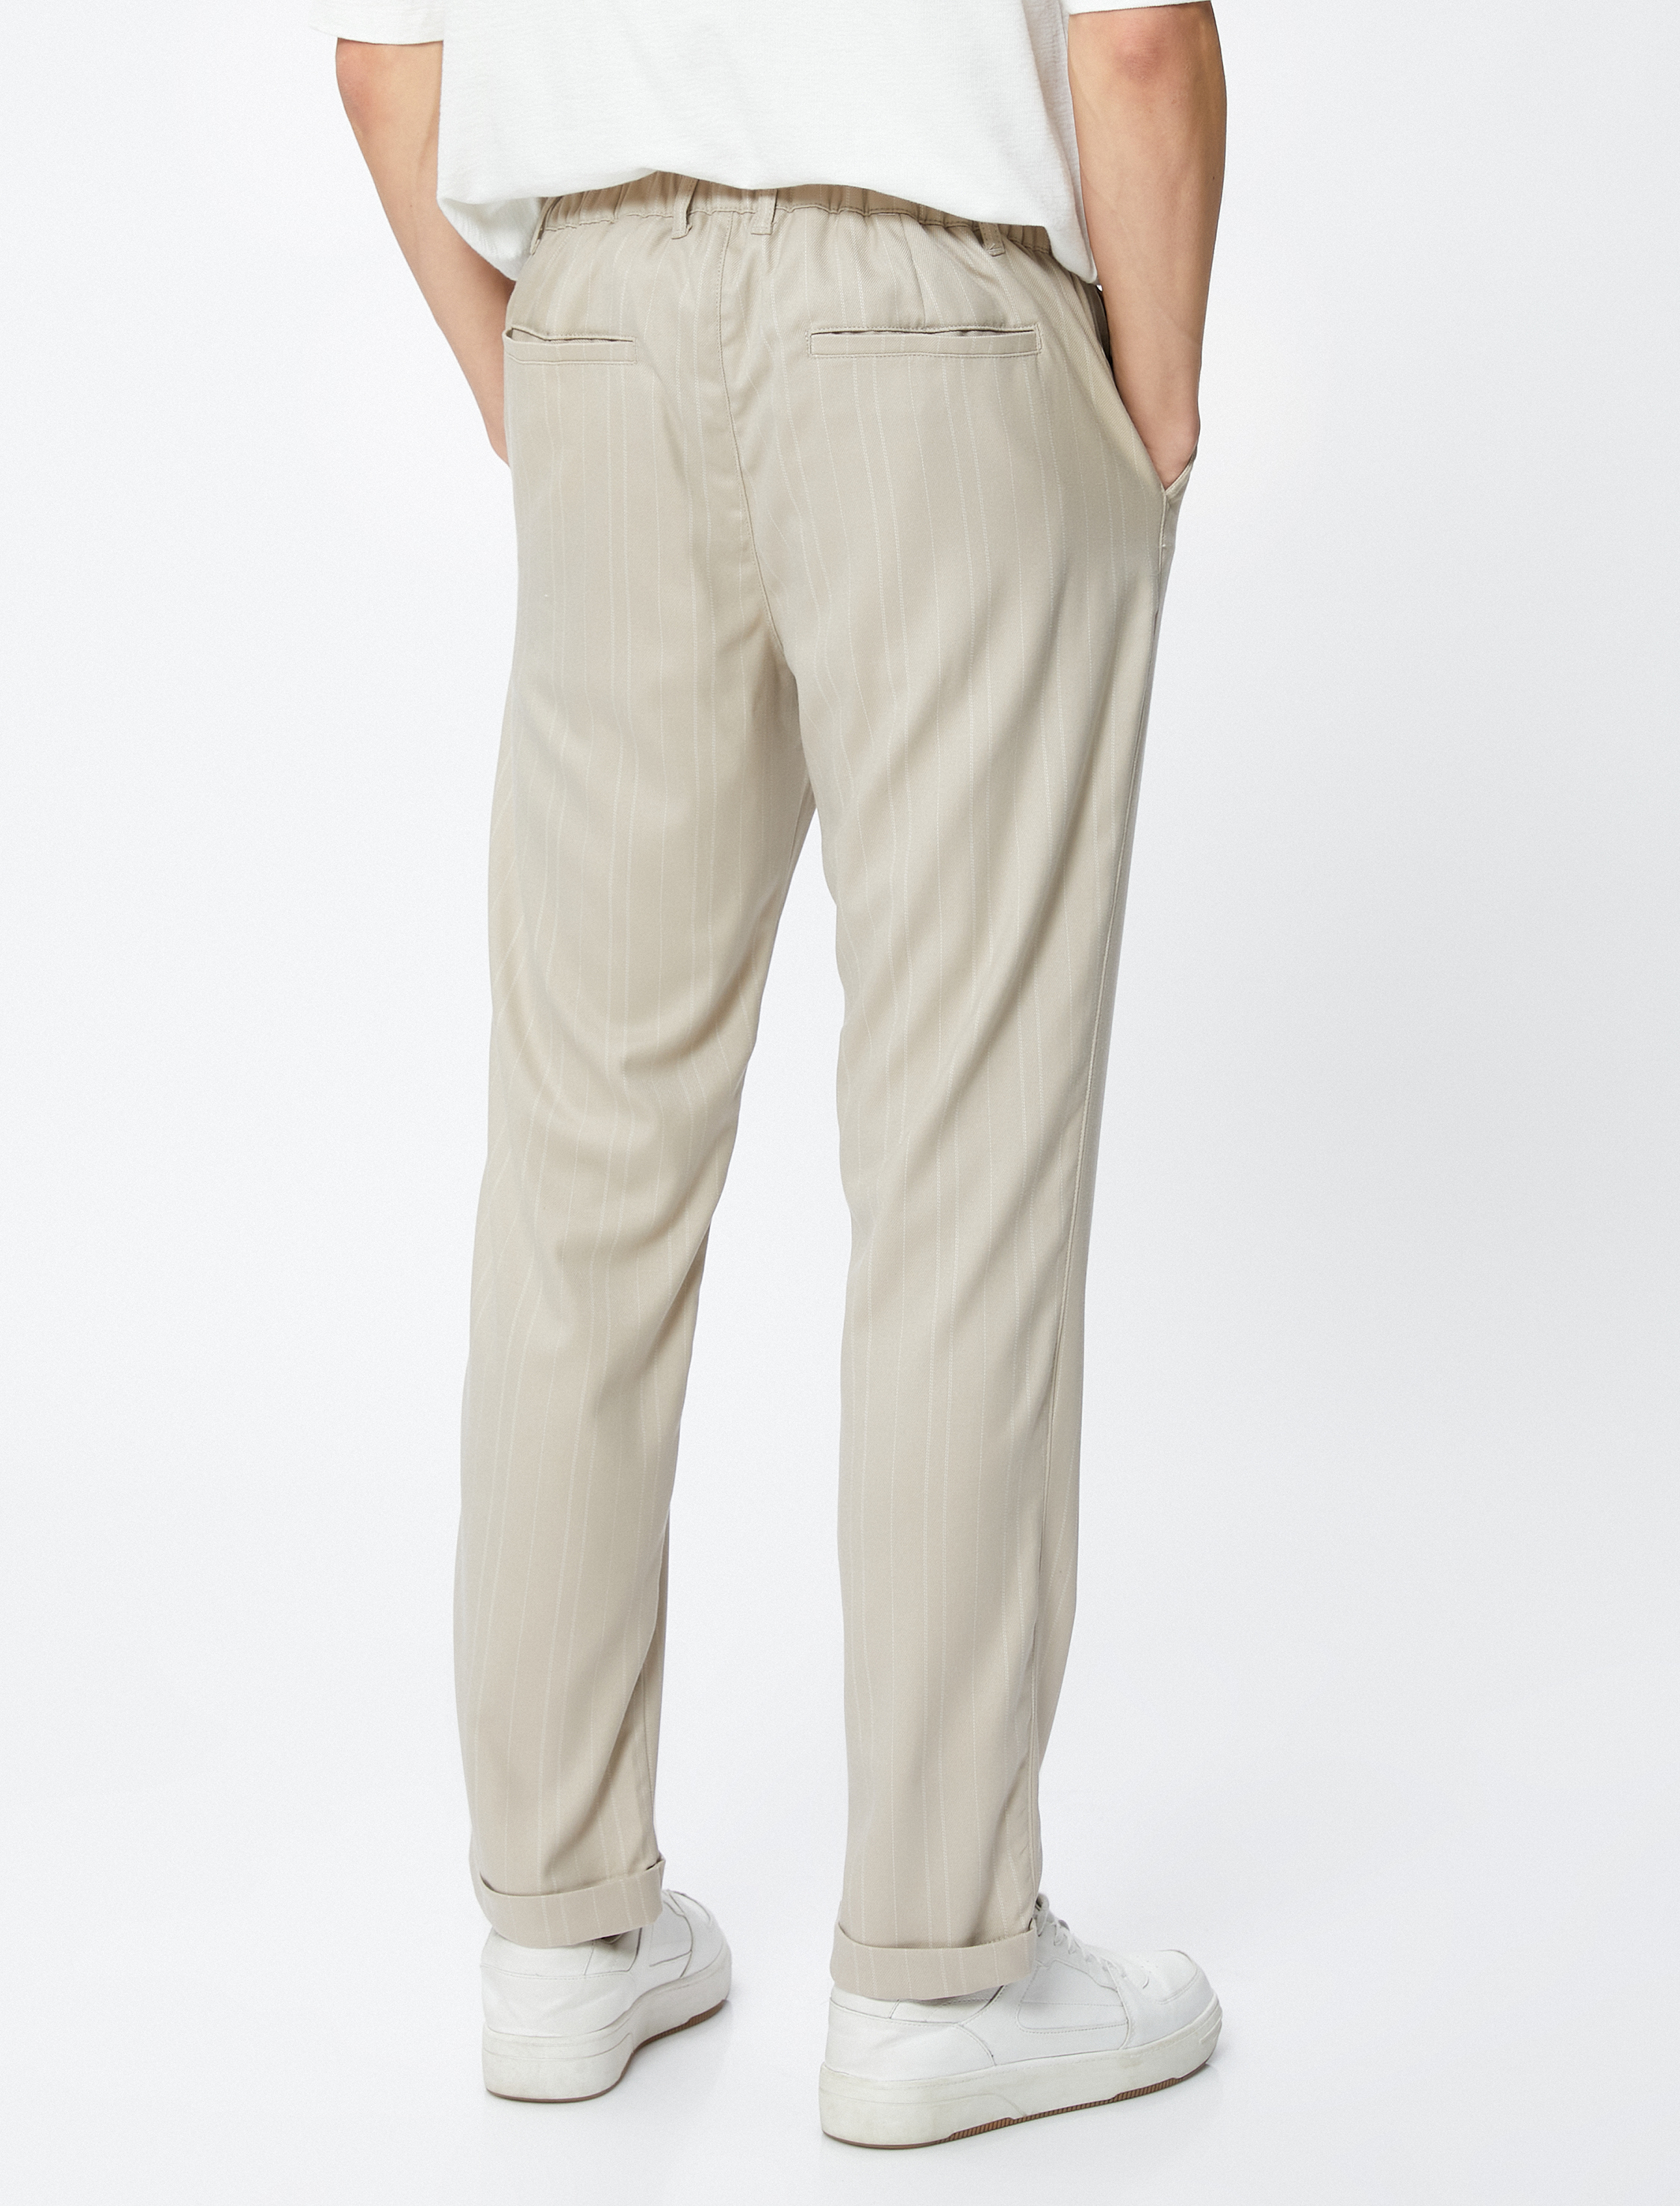 Koton Kumaş Pantolon Slim Fit Düğmeli Cep Detaylı Viskon Karışımlı. 4